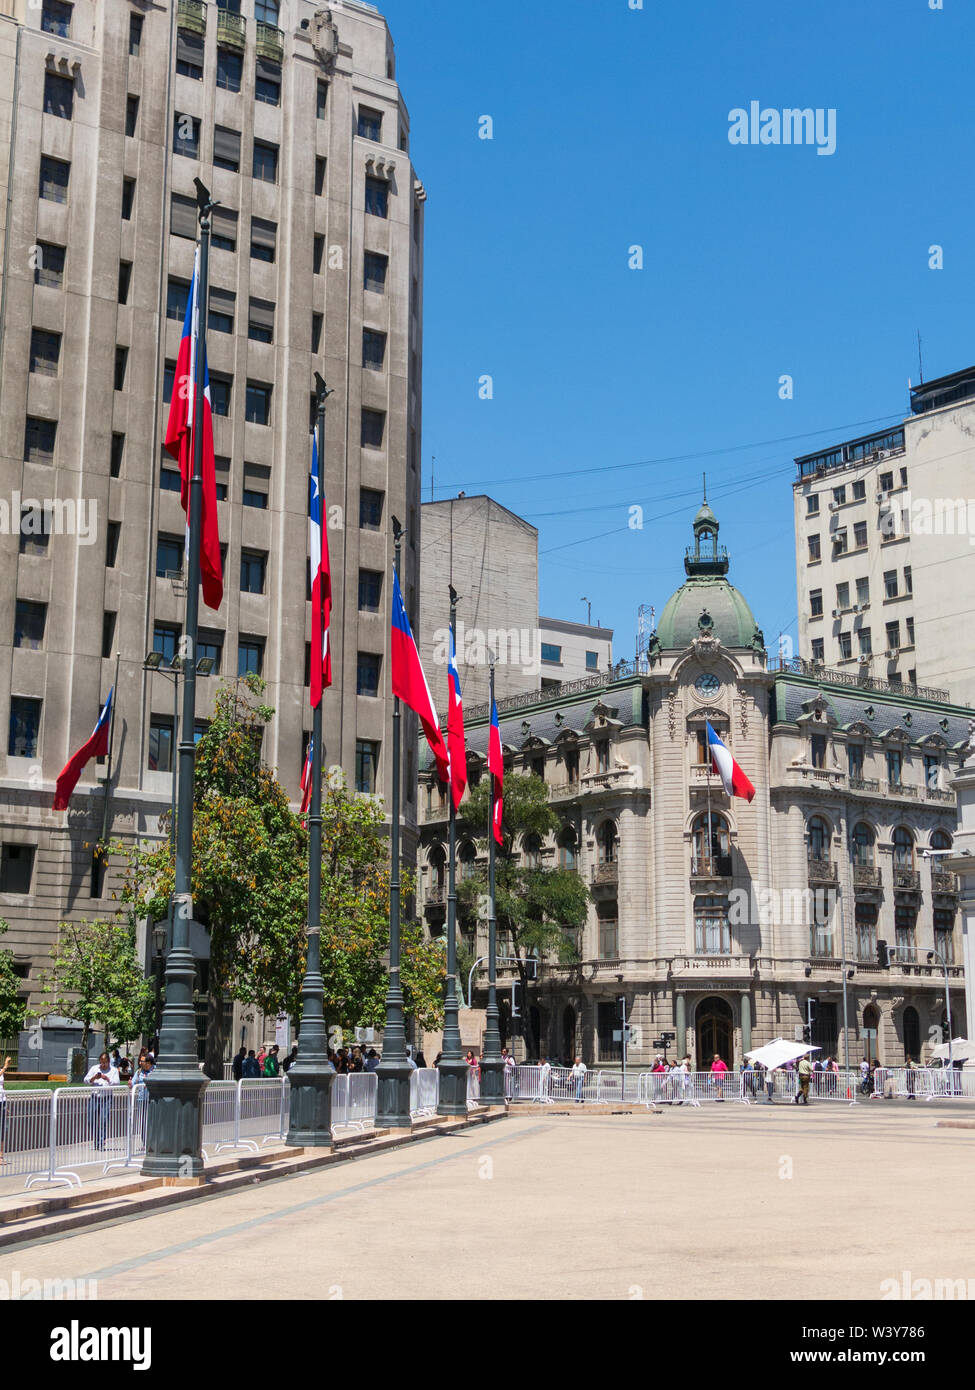 SANTIAGO DE CHILE, CHILE - JANUARY 26, 2018: Chilean flags waving in the Plaza de la Constitución, in the center of the city of Santiago de Chile, Chi Stock Photo